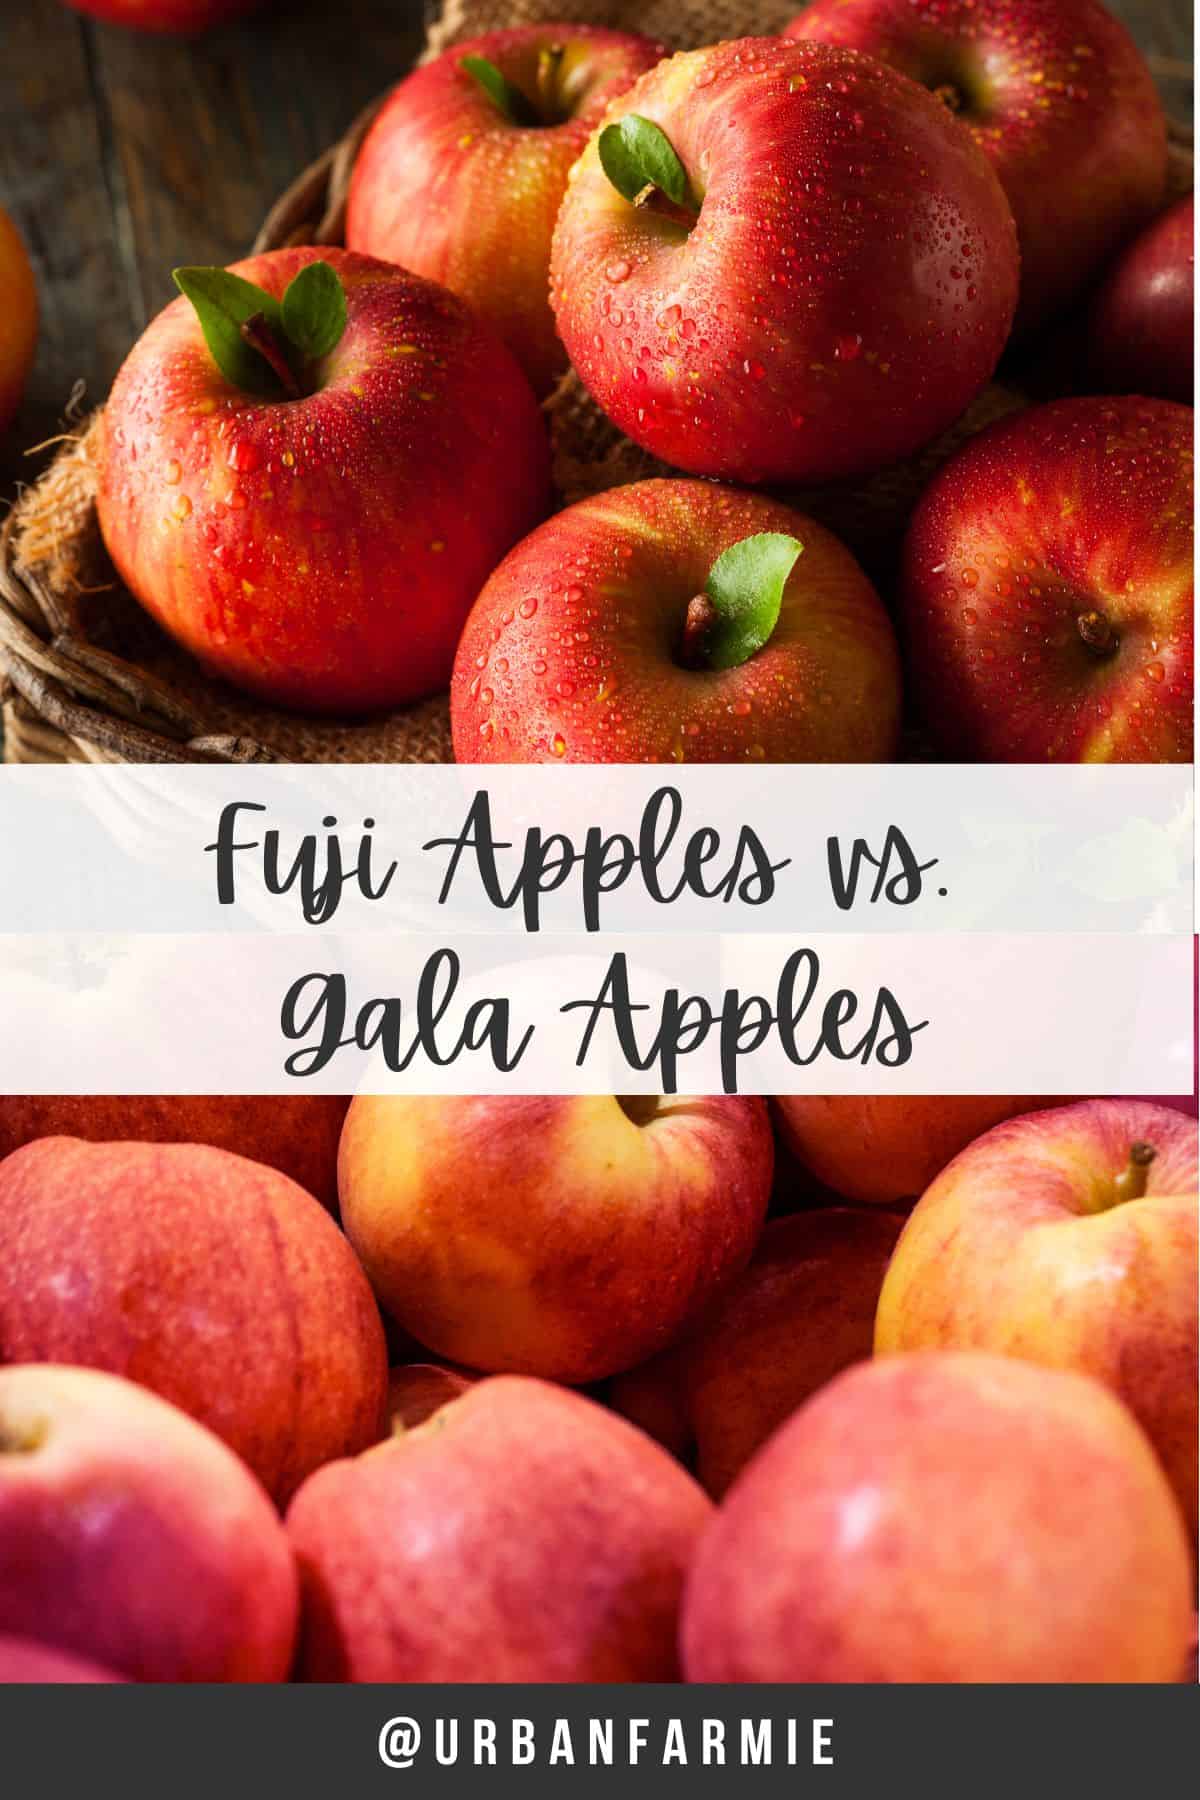 https://urbanfarmie.com/wp-content/uploads/Fuji-Apples-vs.-Gala-Apples-Featured-Image.jpg